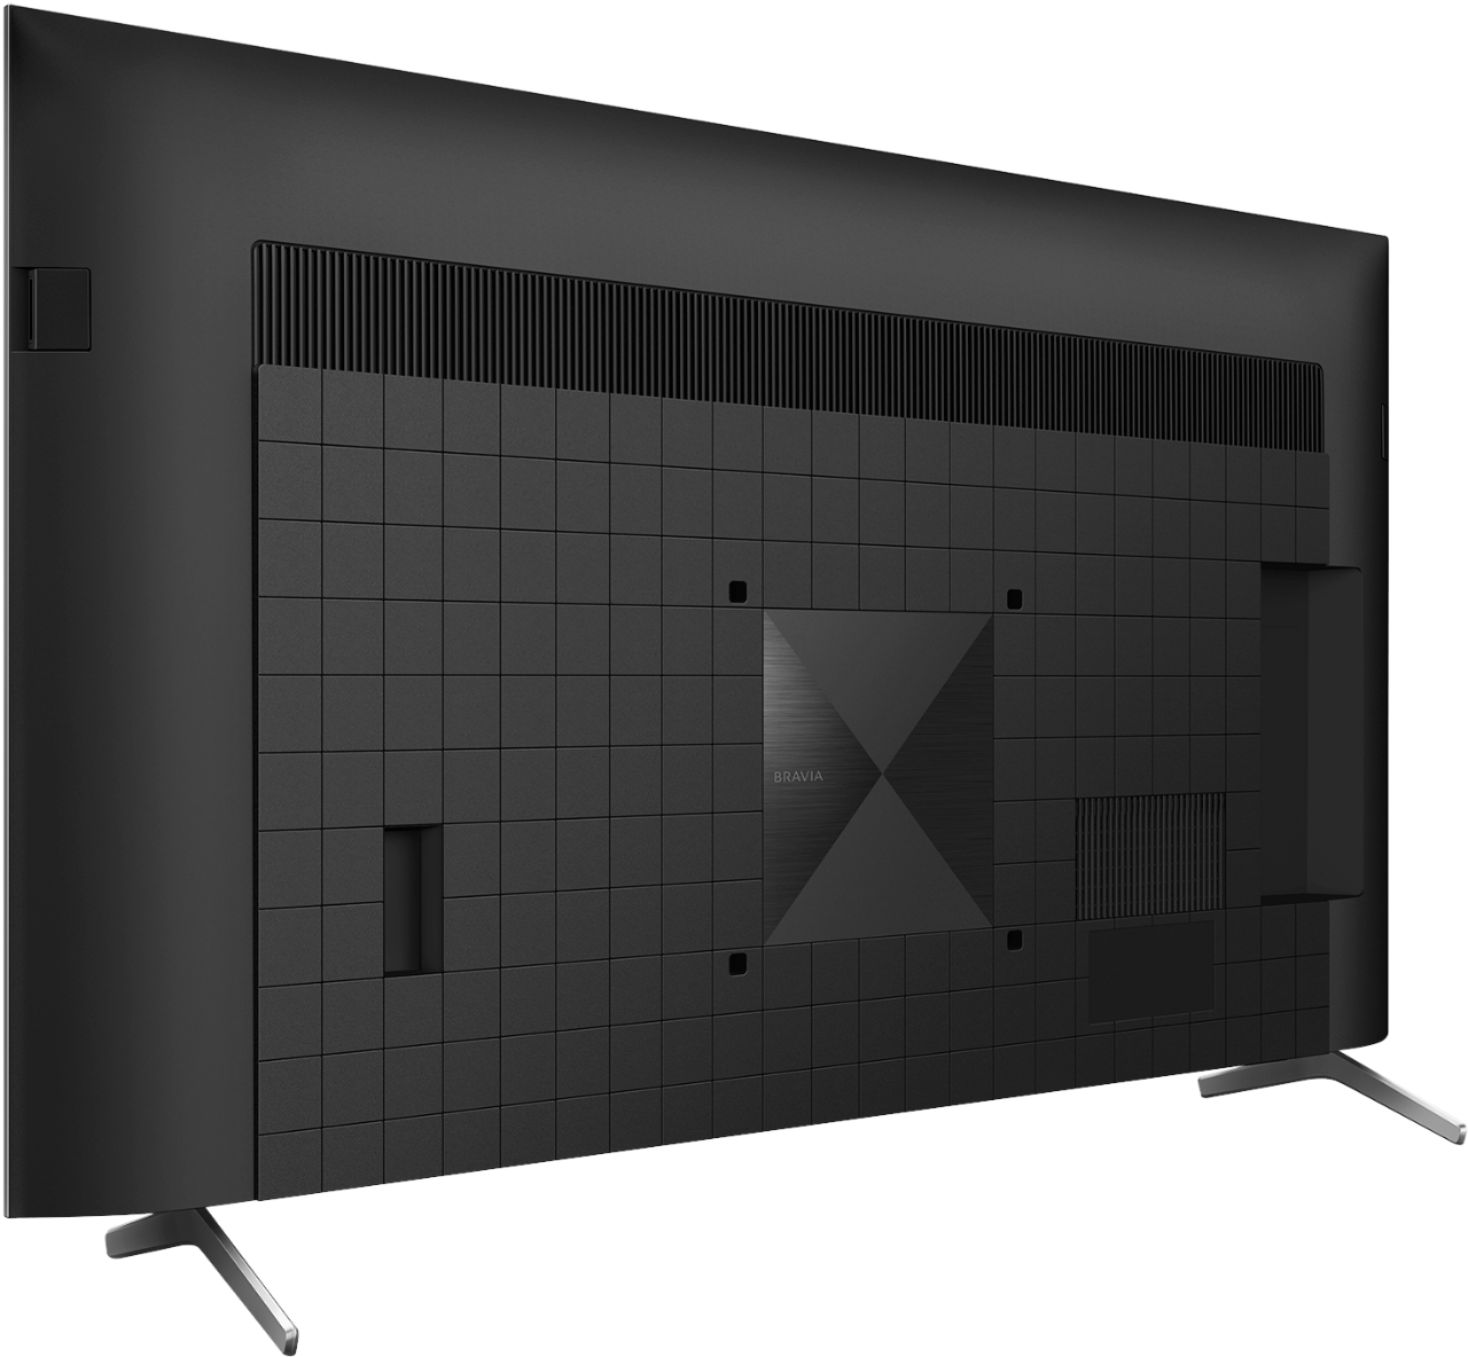 Angle View: Samsung - 65" Class 8000 Series LED 4K UHD Smart Tizen TV